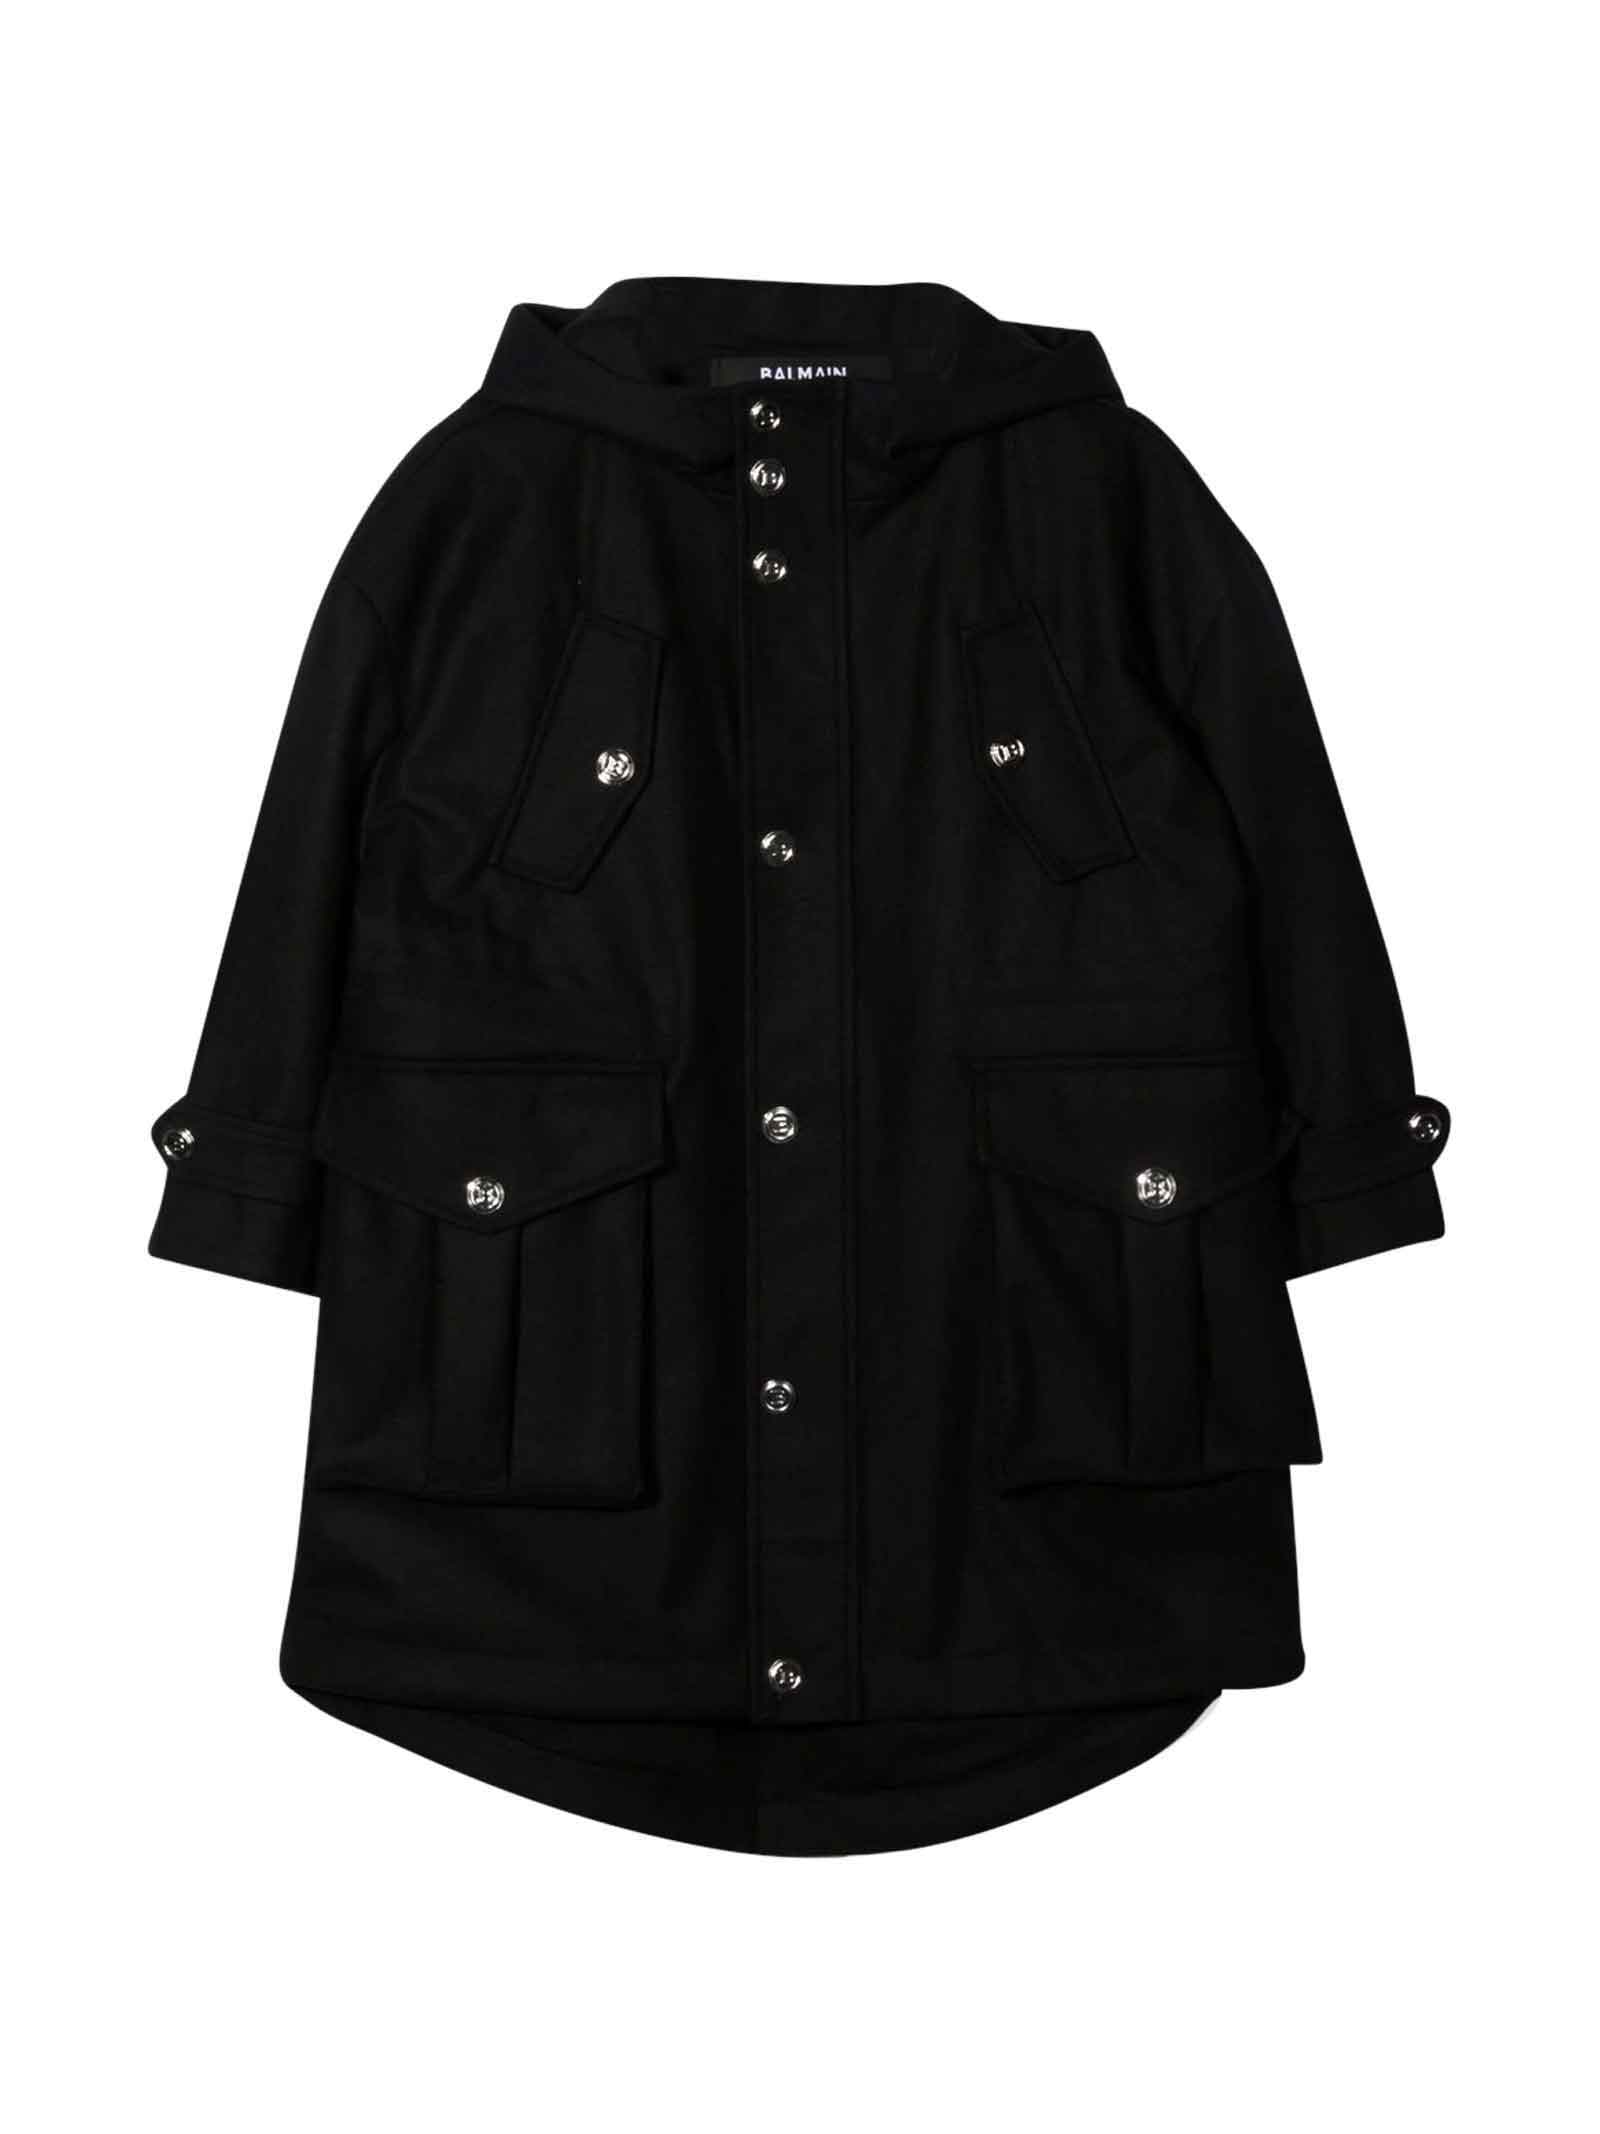 Balmain Black Hooded Coat